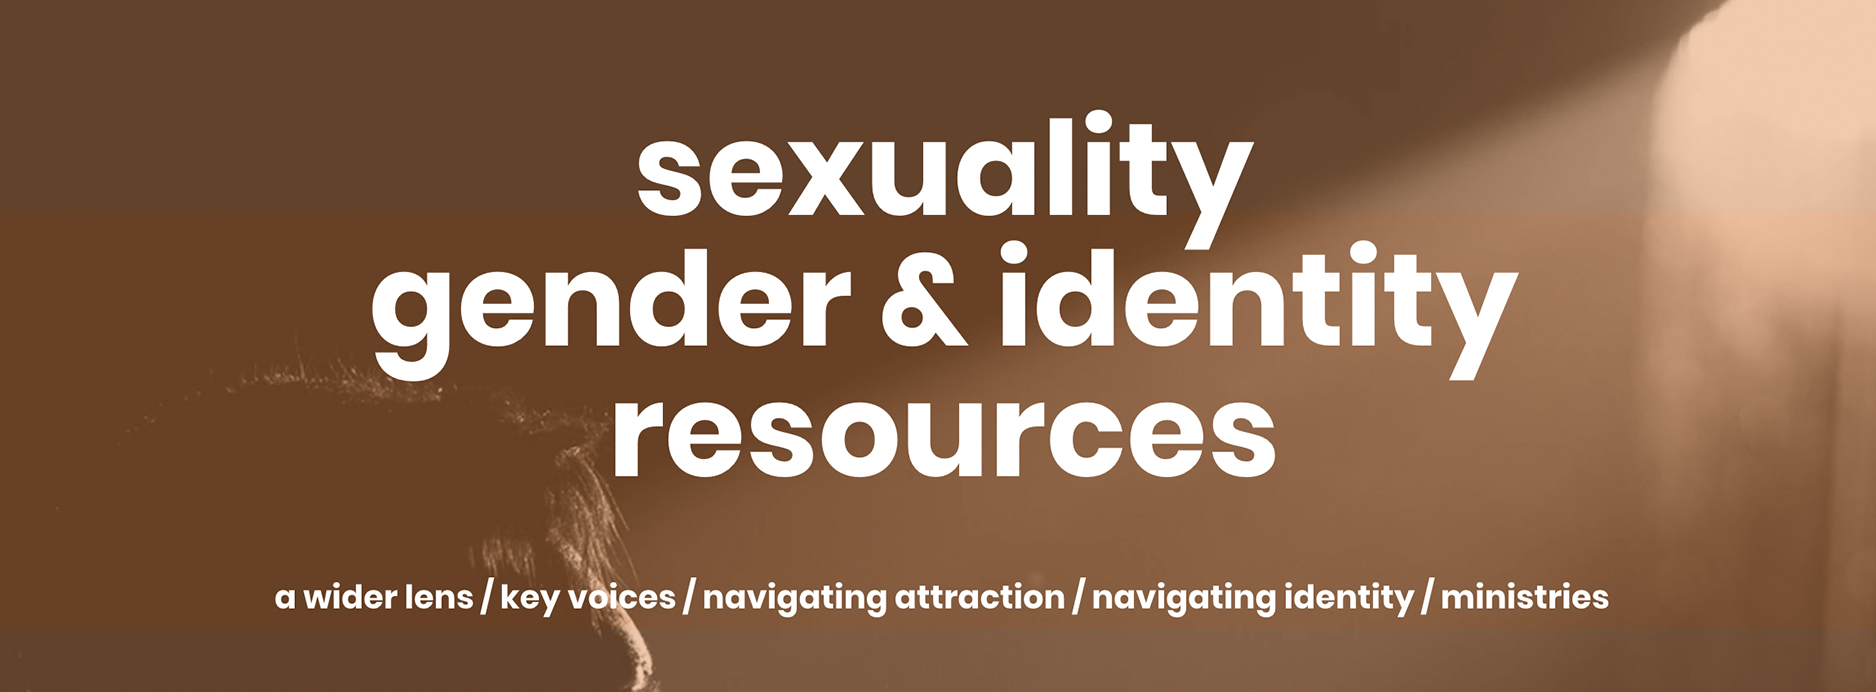 reKindle: Gender & Identity Resources